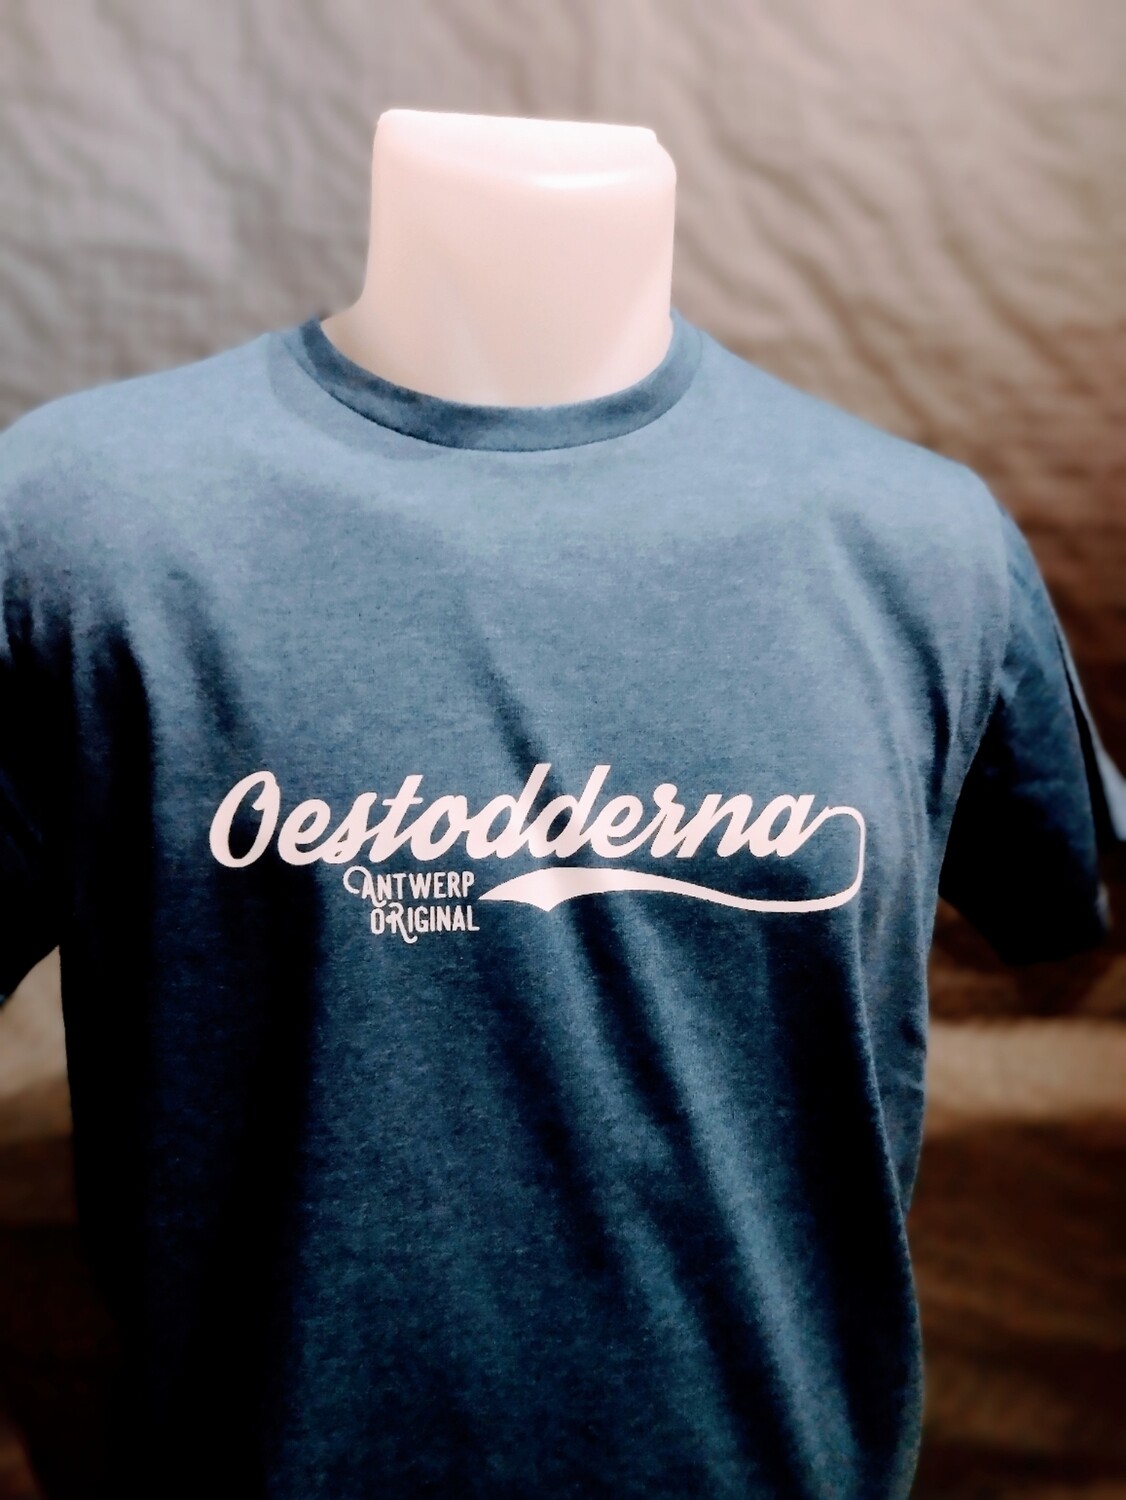 T shirt - Oestodderna